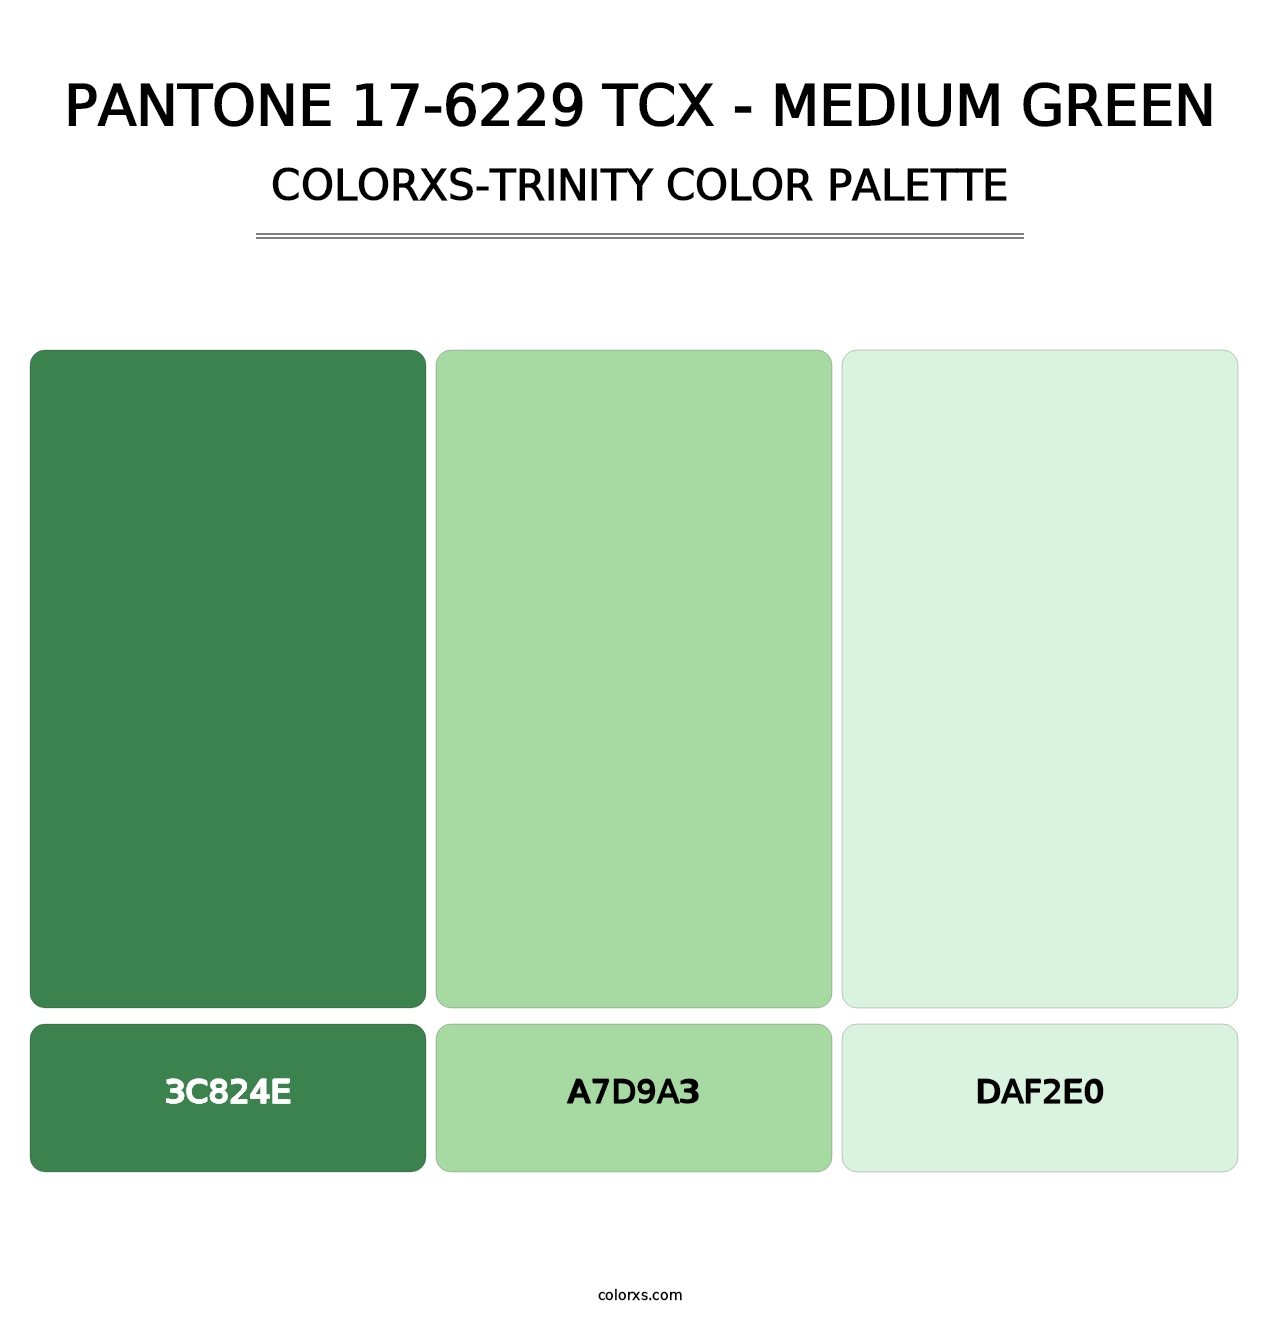 PANTONE 17-6229 TCX - Medium Green - Colorxs Trinity Palette